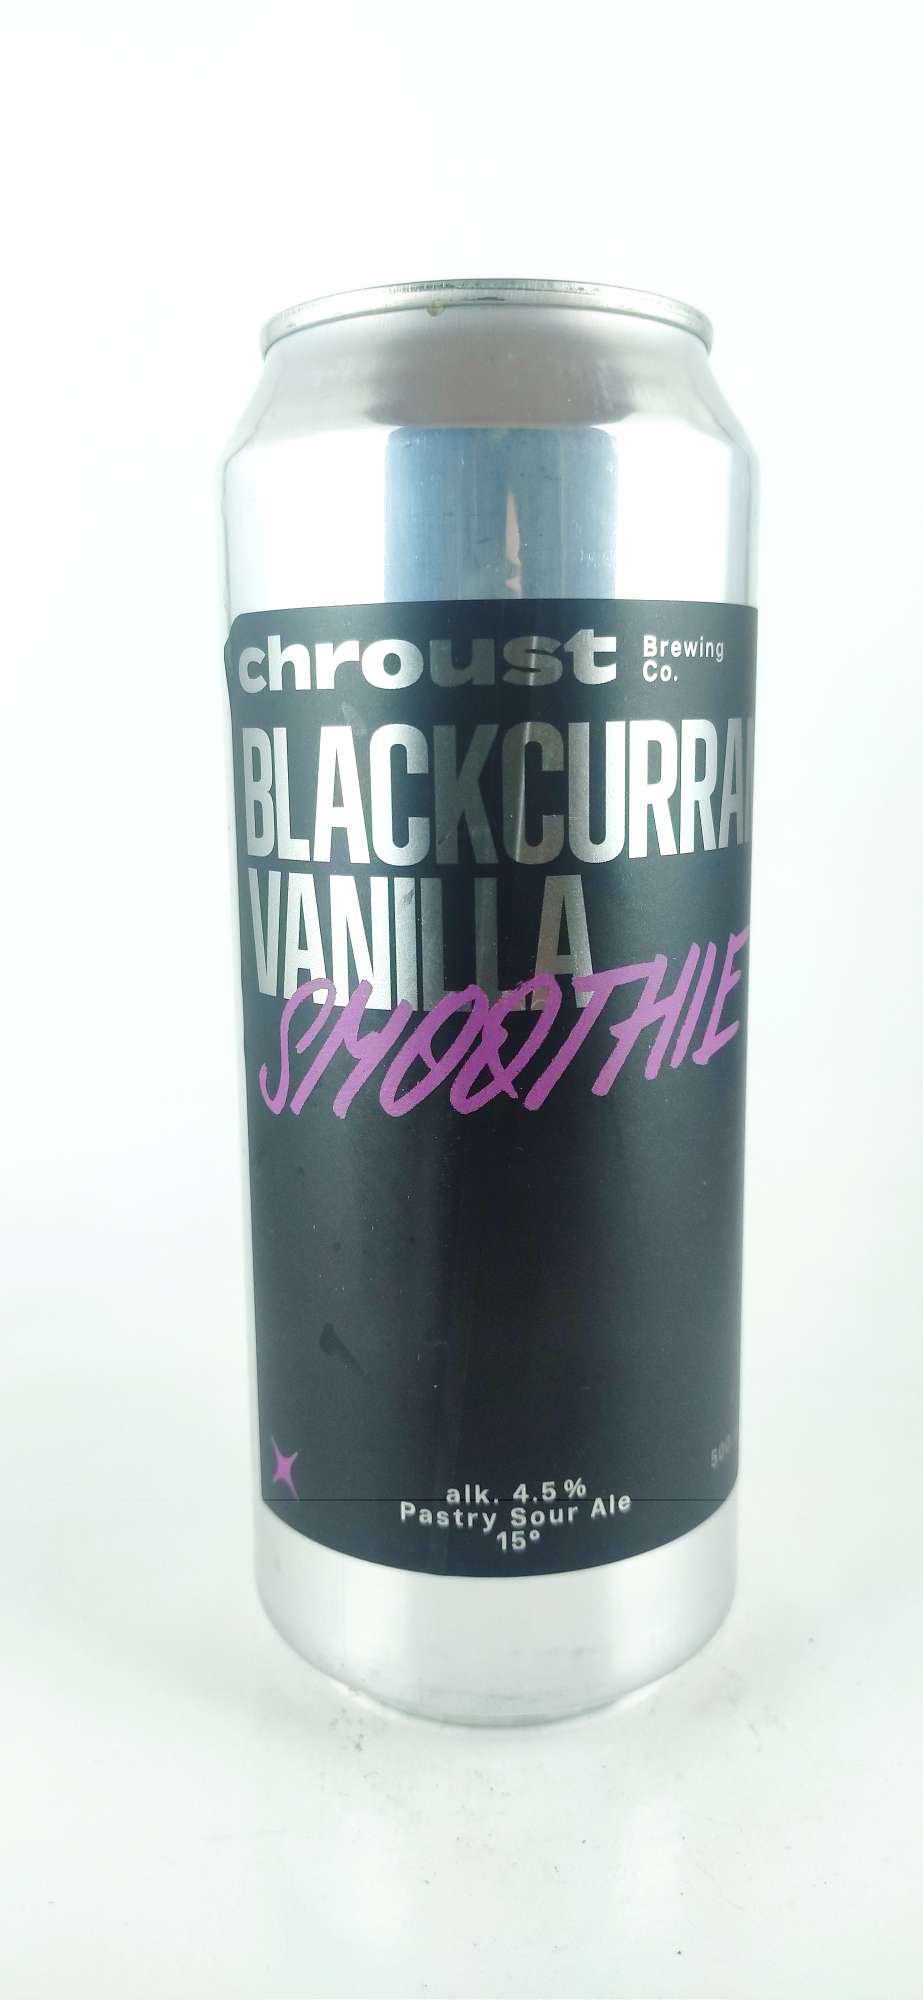 Chroust Blackcurrant Vanilla Smoothie Sour ALE 15°